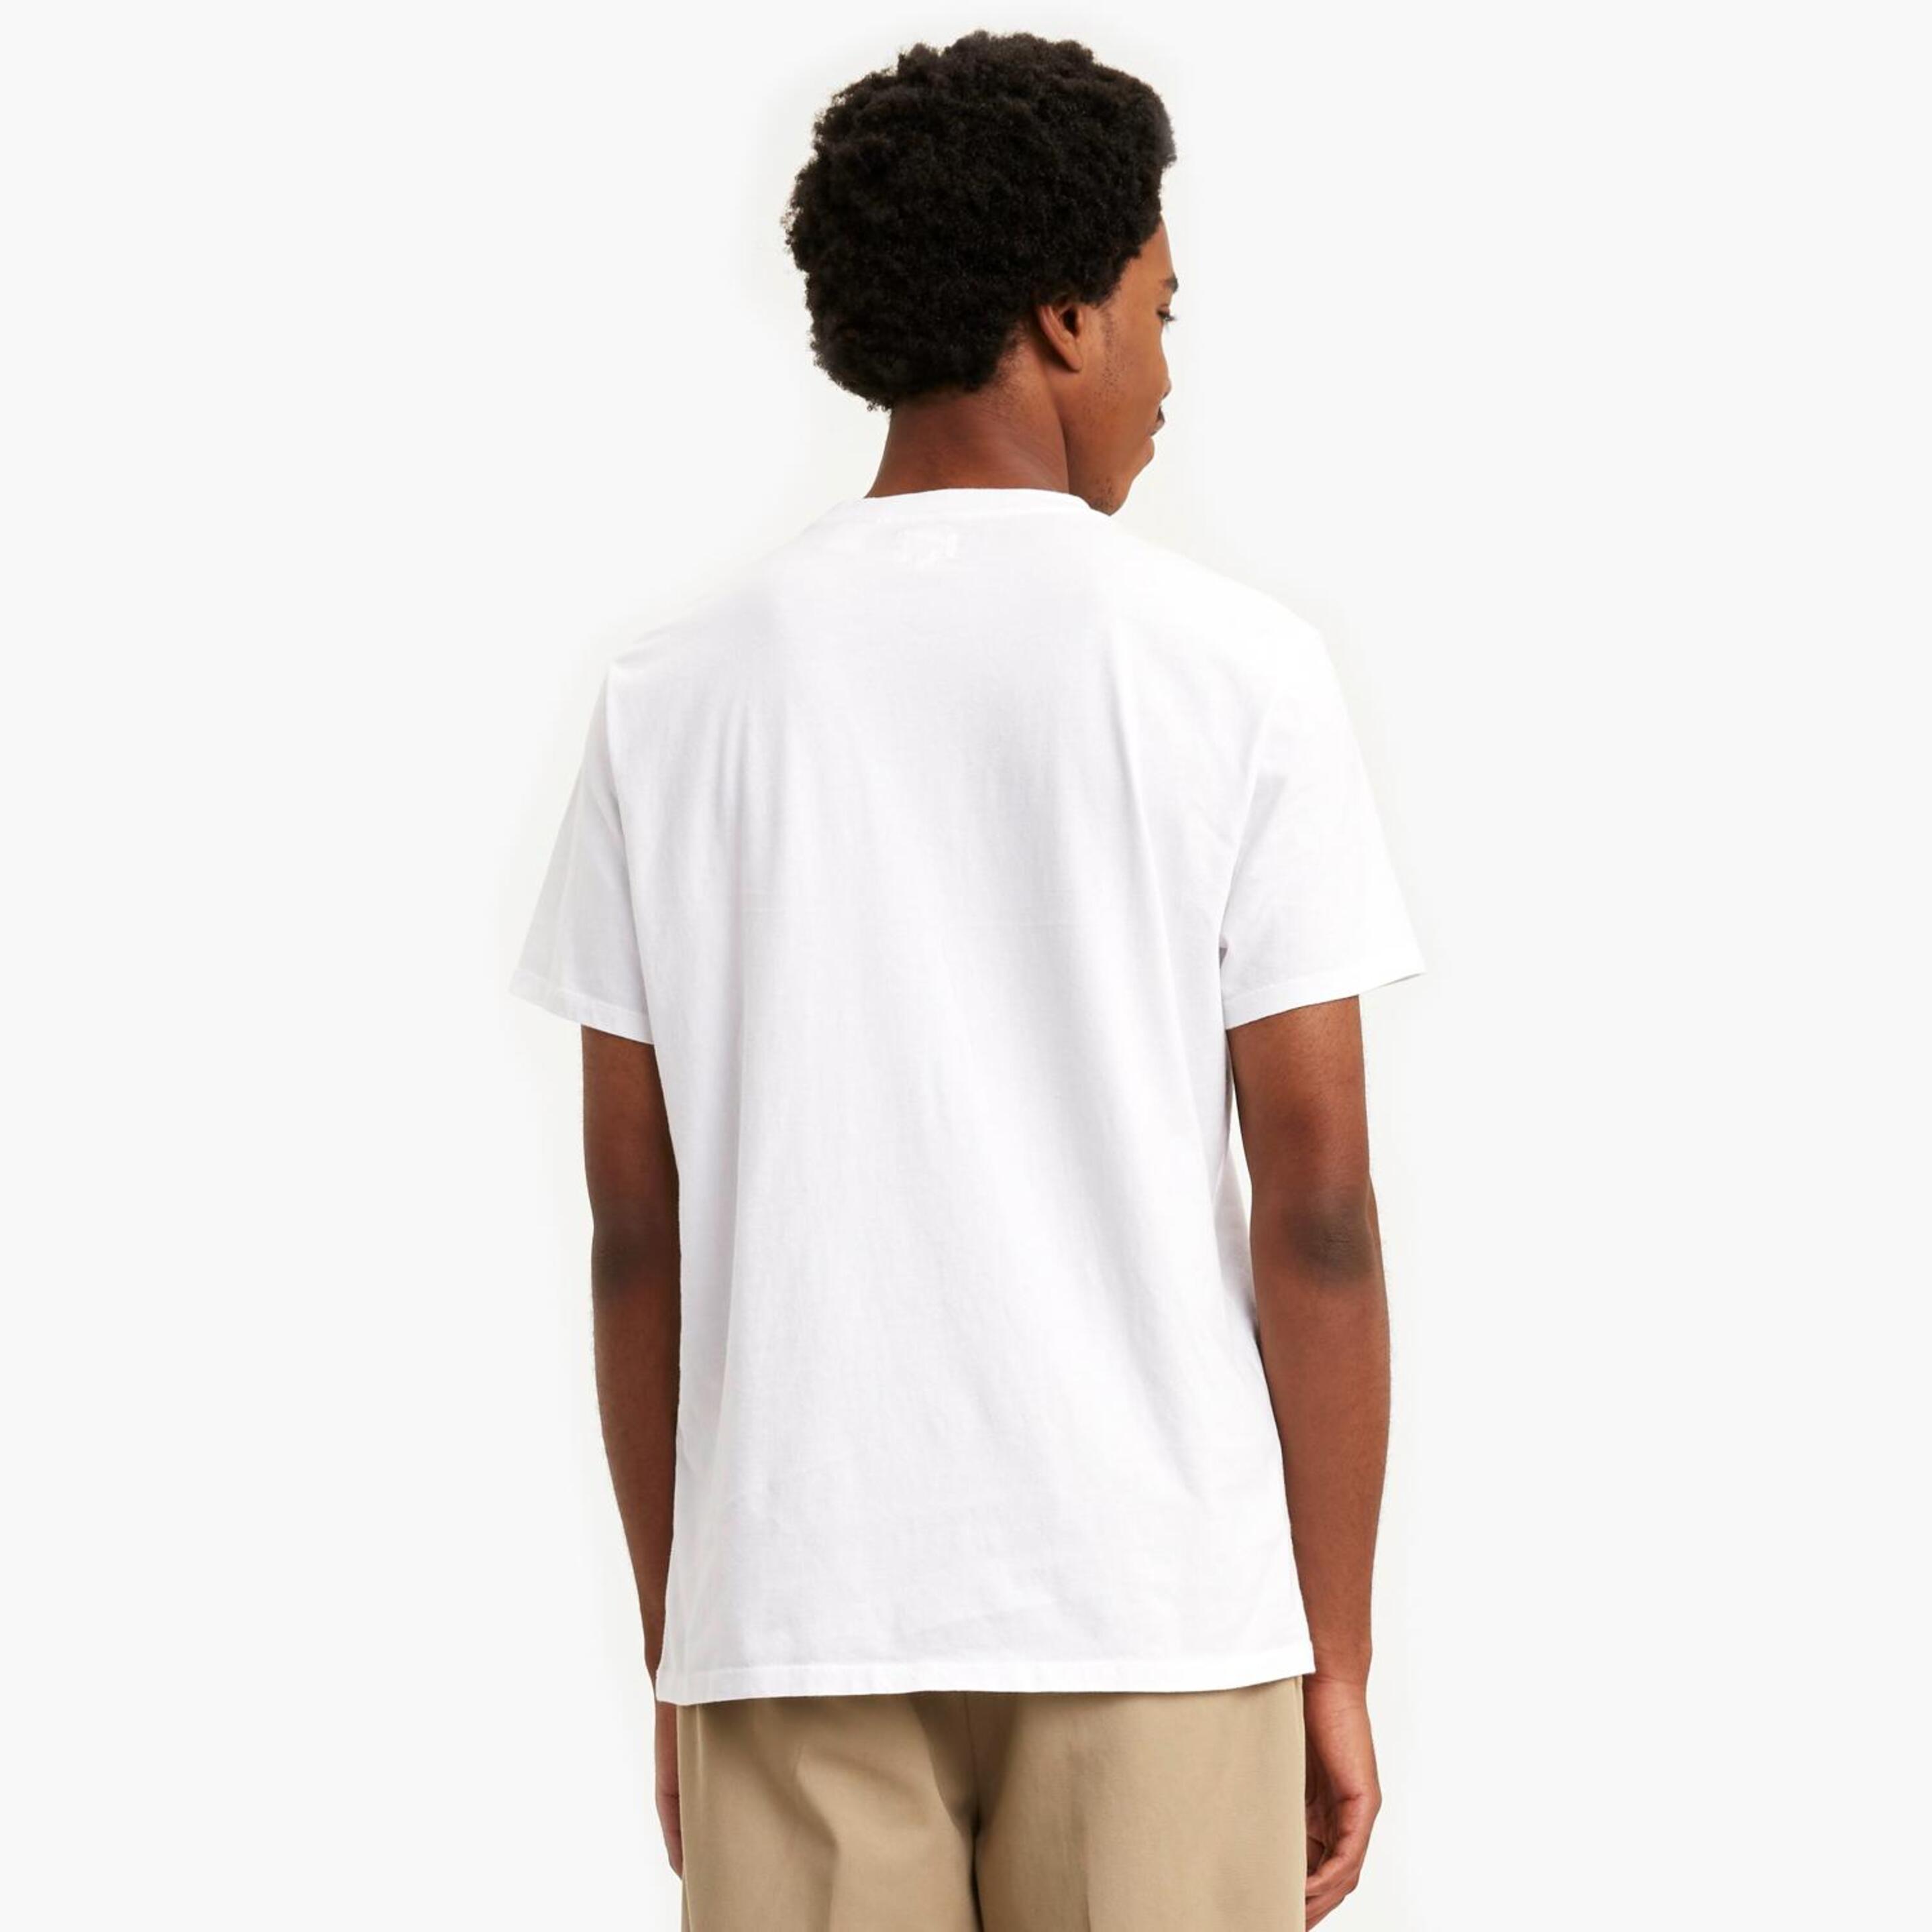 Levi's The Original - Blanco - Camiseta Hombre